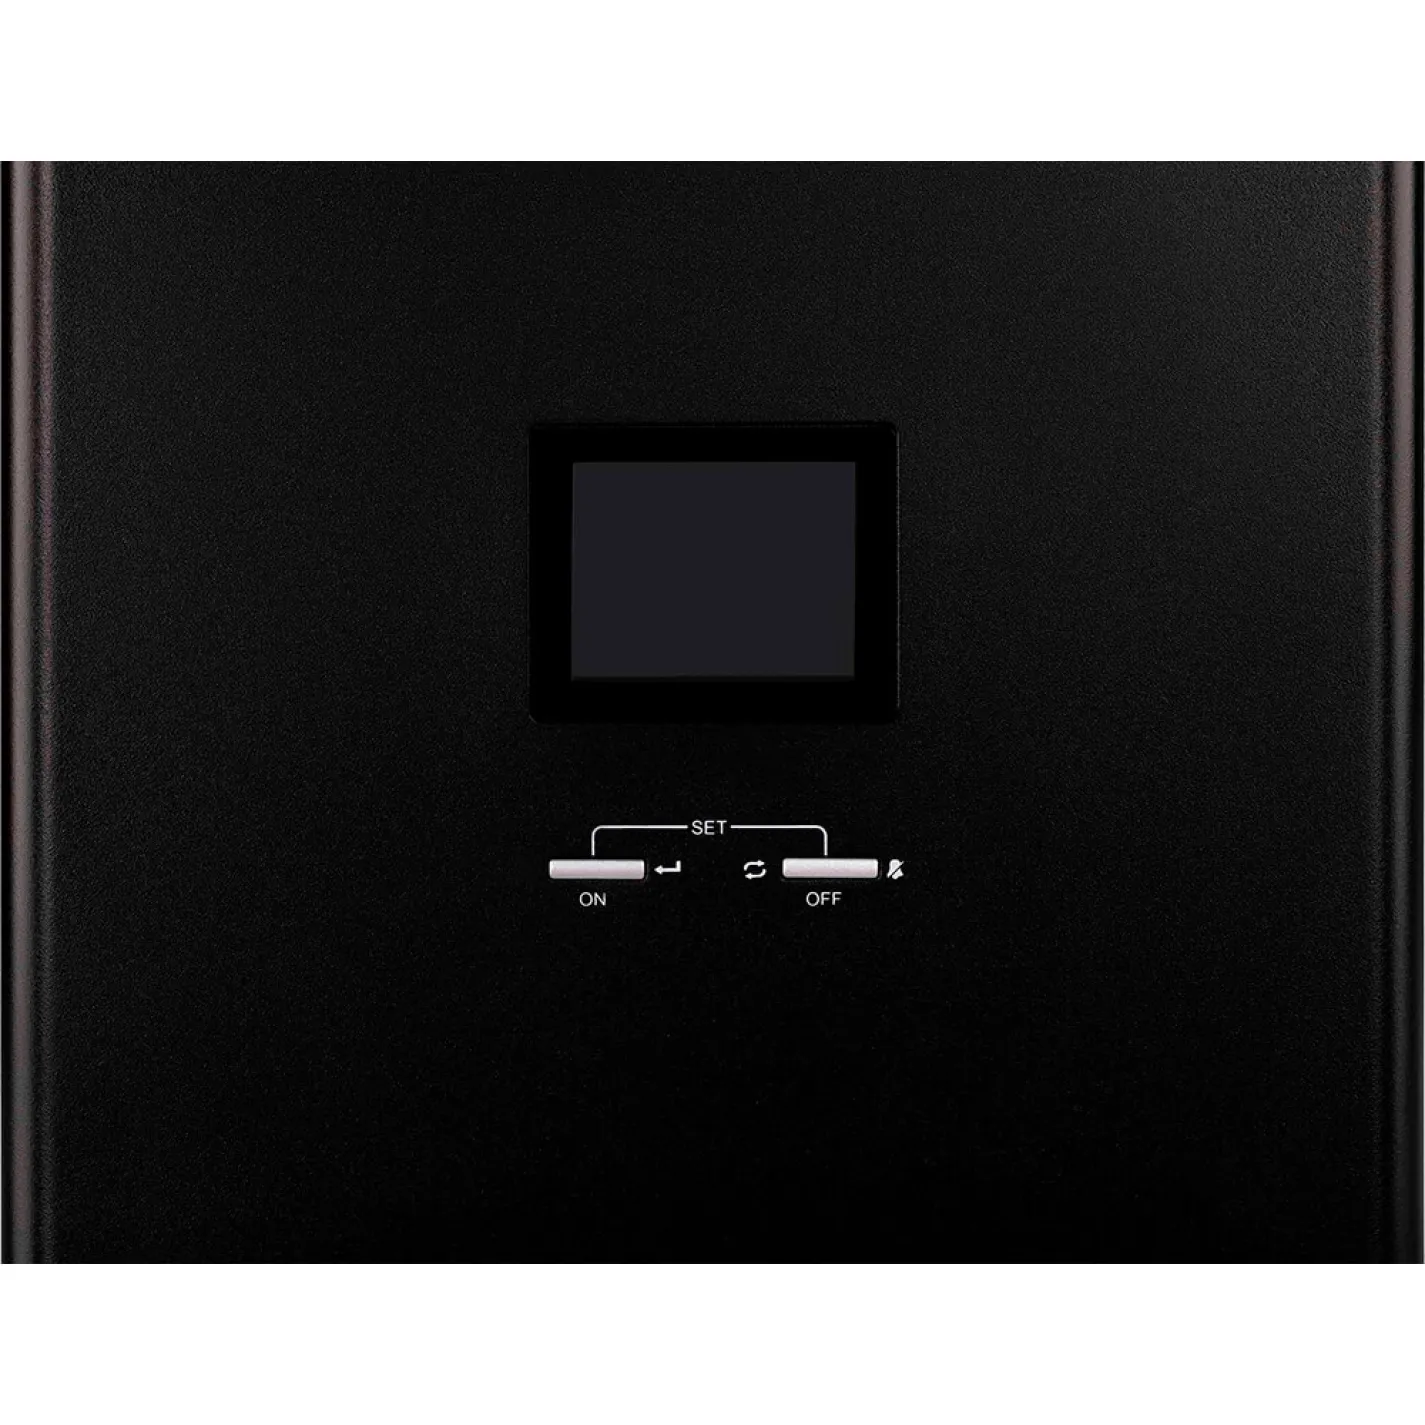 Інвертор 2E HI3500, 3500W, 24V - 230V, LCD, AVR - Фото 1